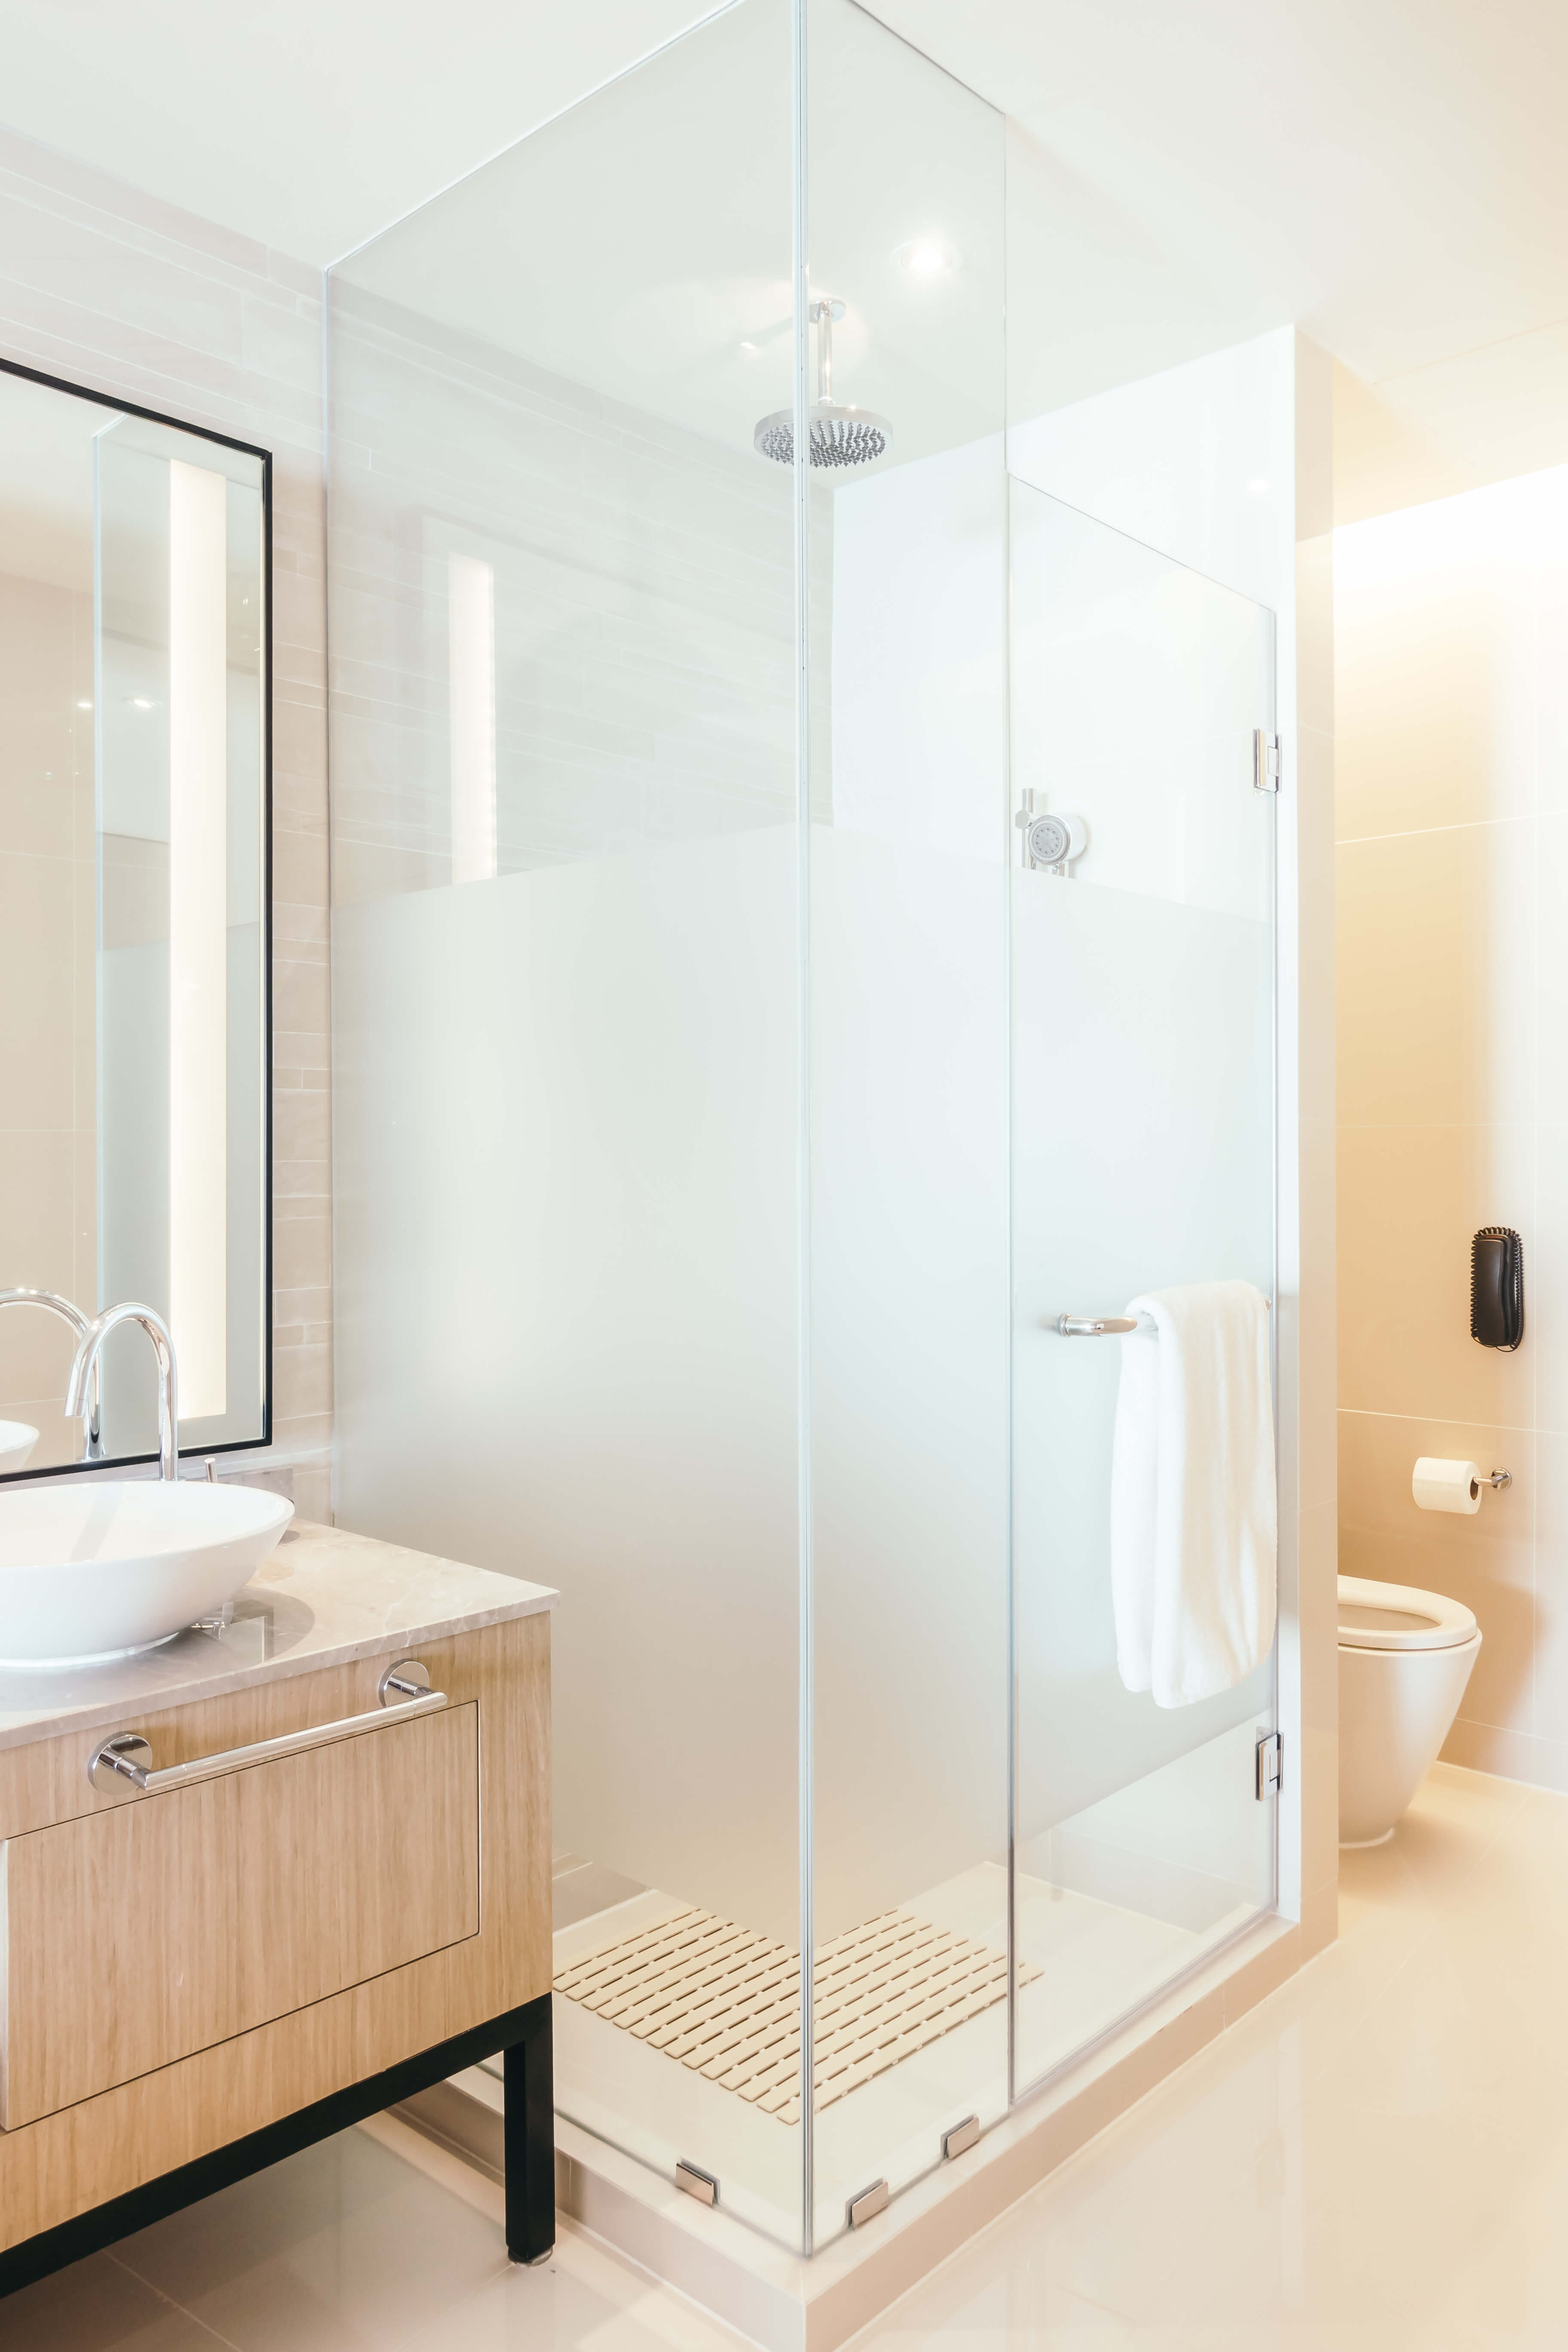 Unique Shower Door Ideas For Small, Bathtub Glass Door Ideas